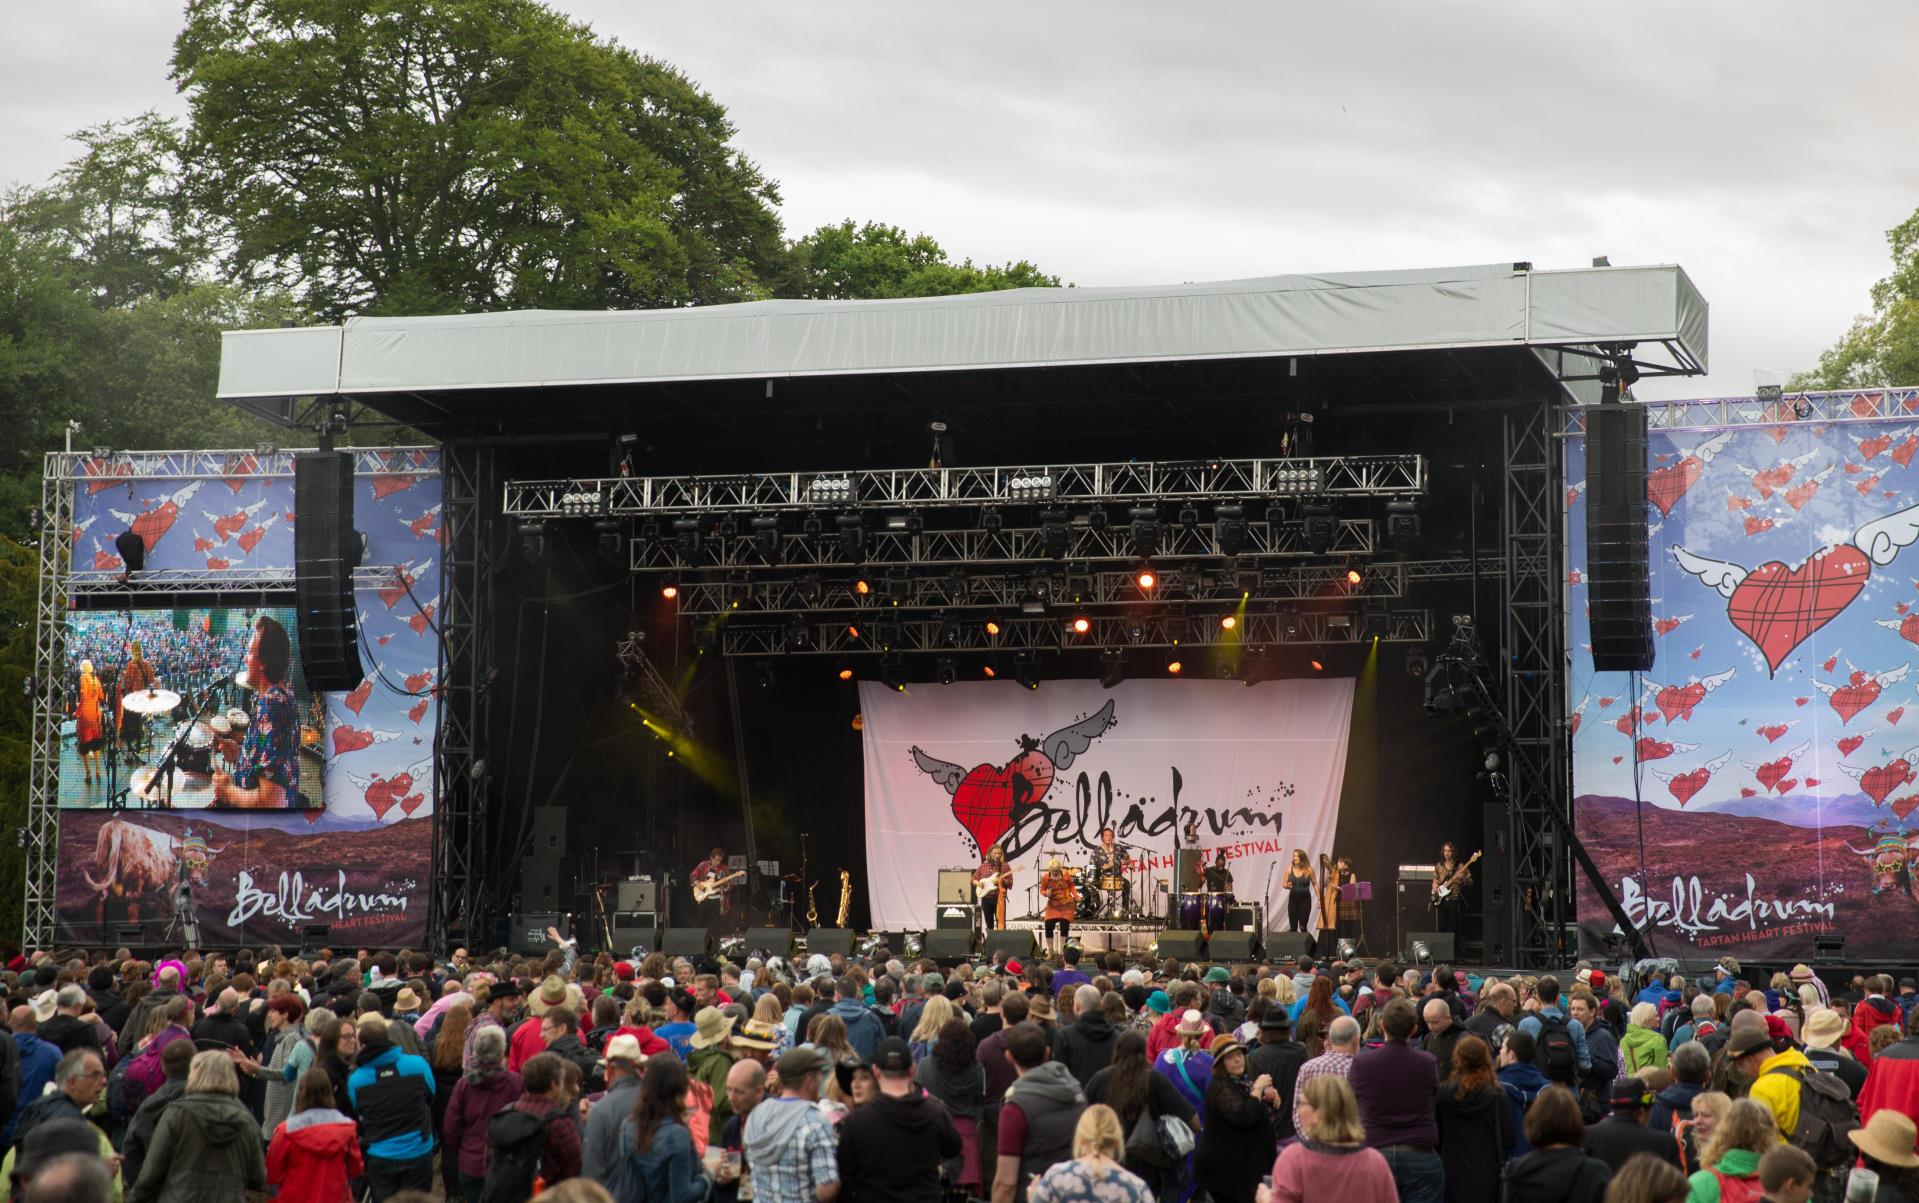 events in Scotland 2022 include Belladrum festival